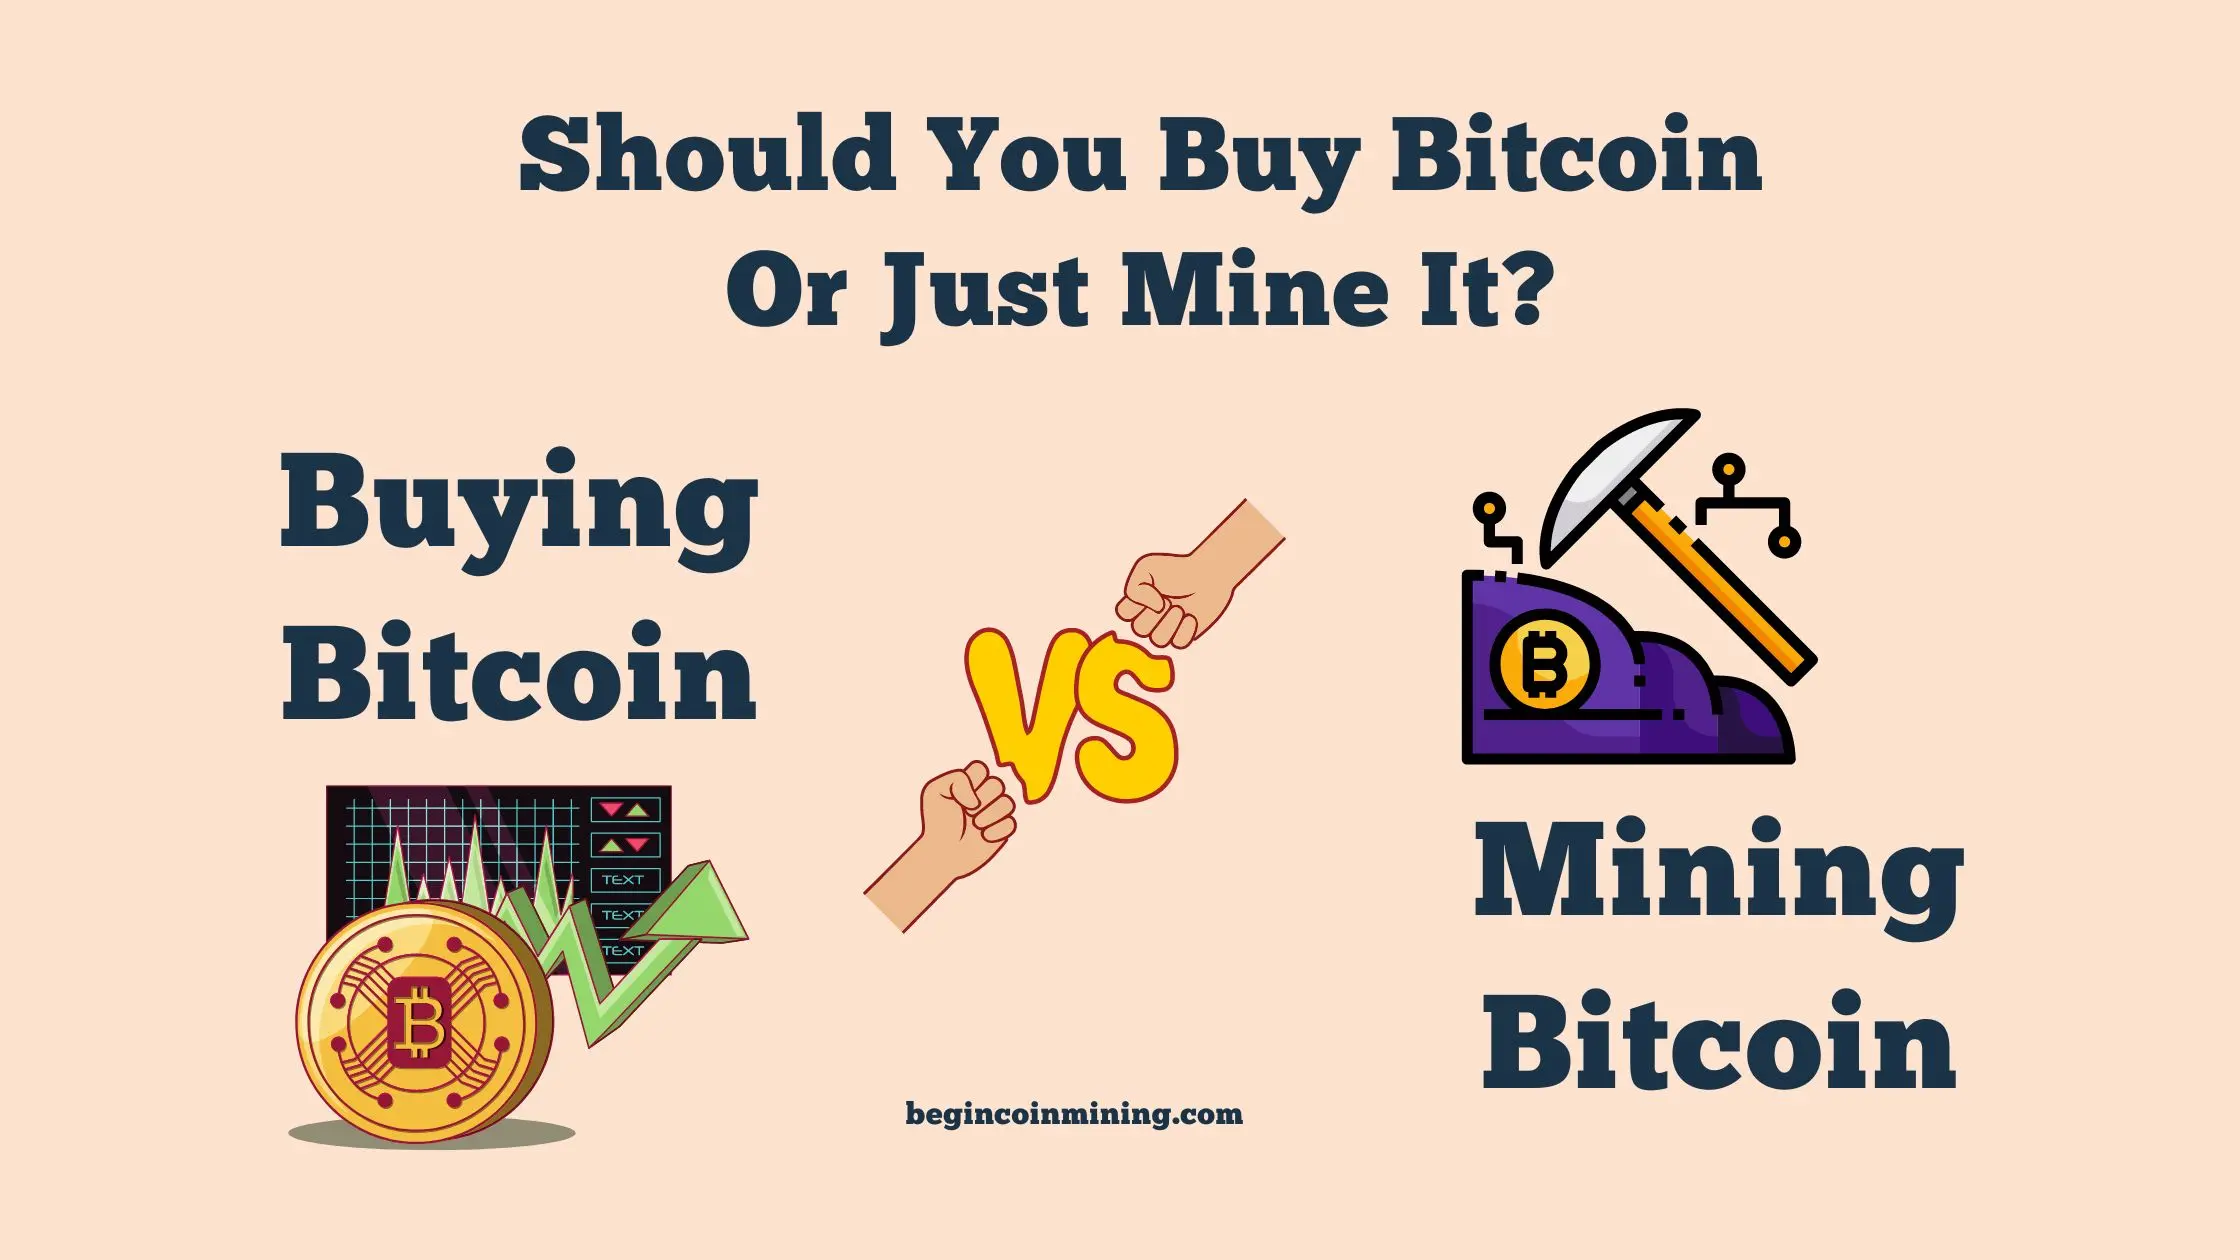 mining bitcoin or buying bitcoin